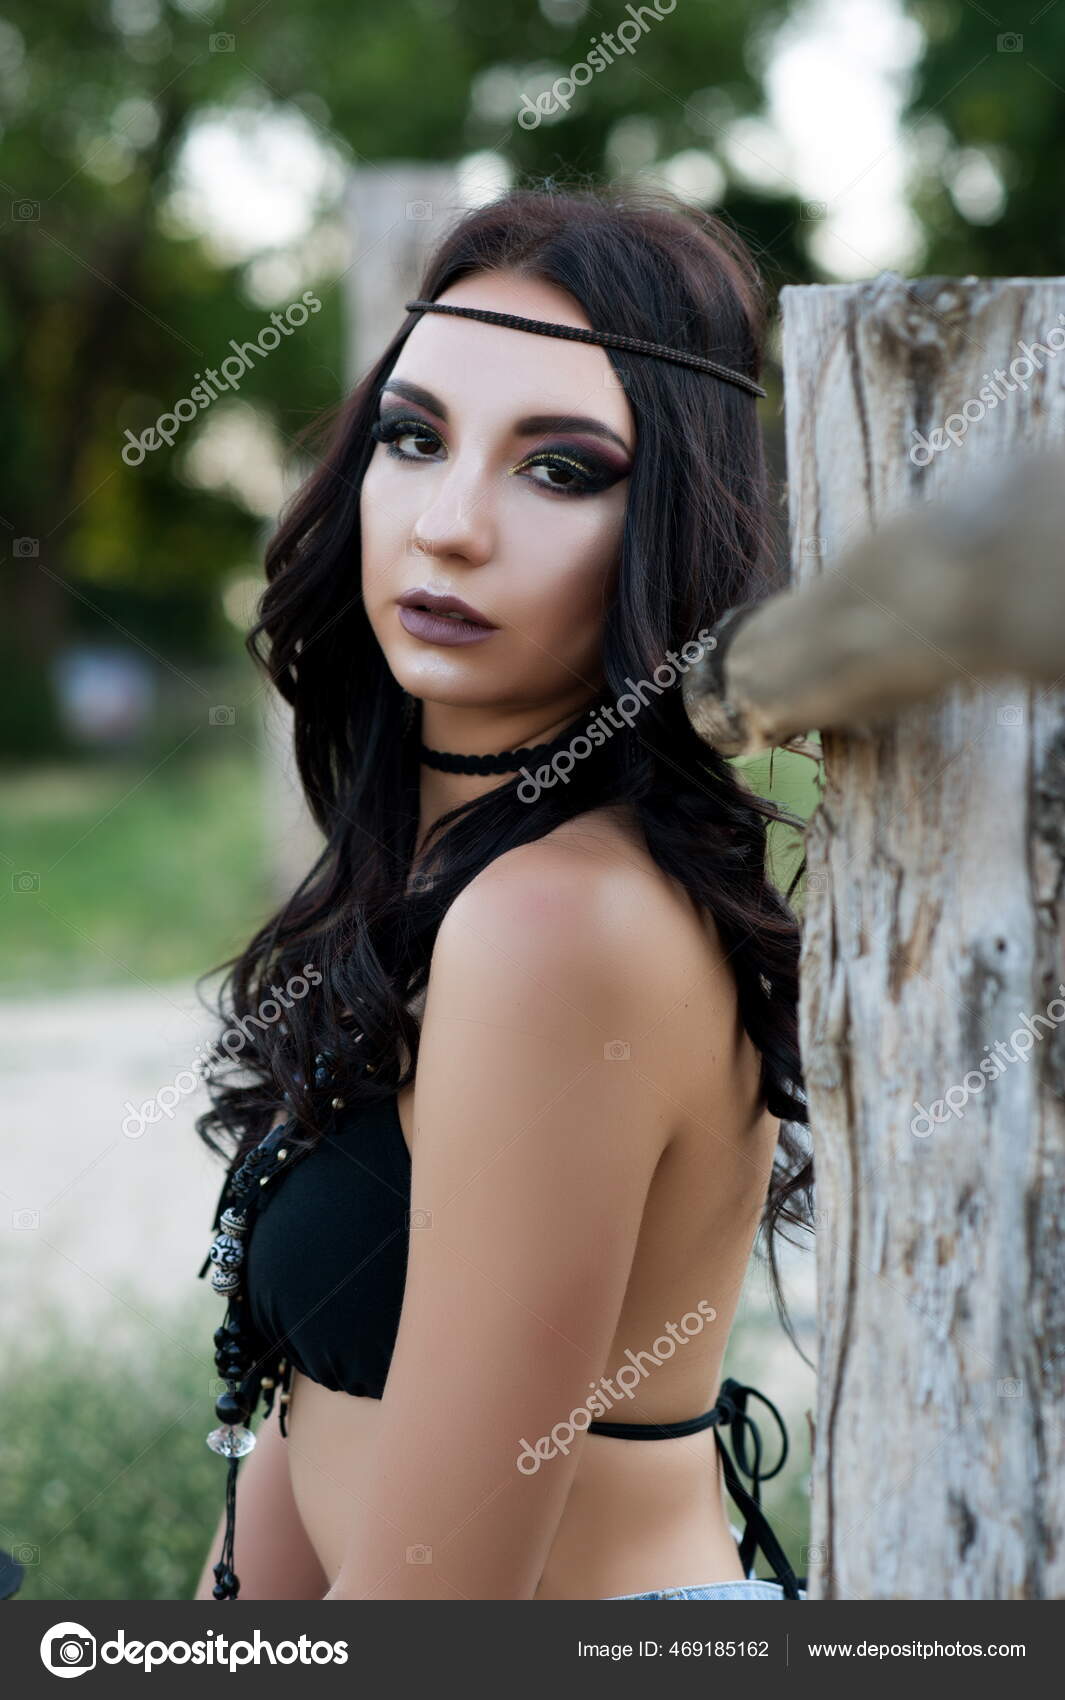 https://st2.depositphotos.com/1012146/46918/i/1600/depositphotos_469185162-stock-photo-beautiful-sexy-brunette-girl-dressed.jpg